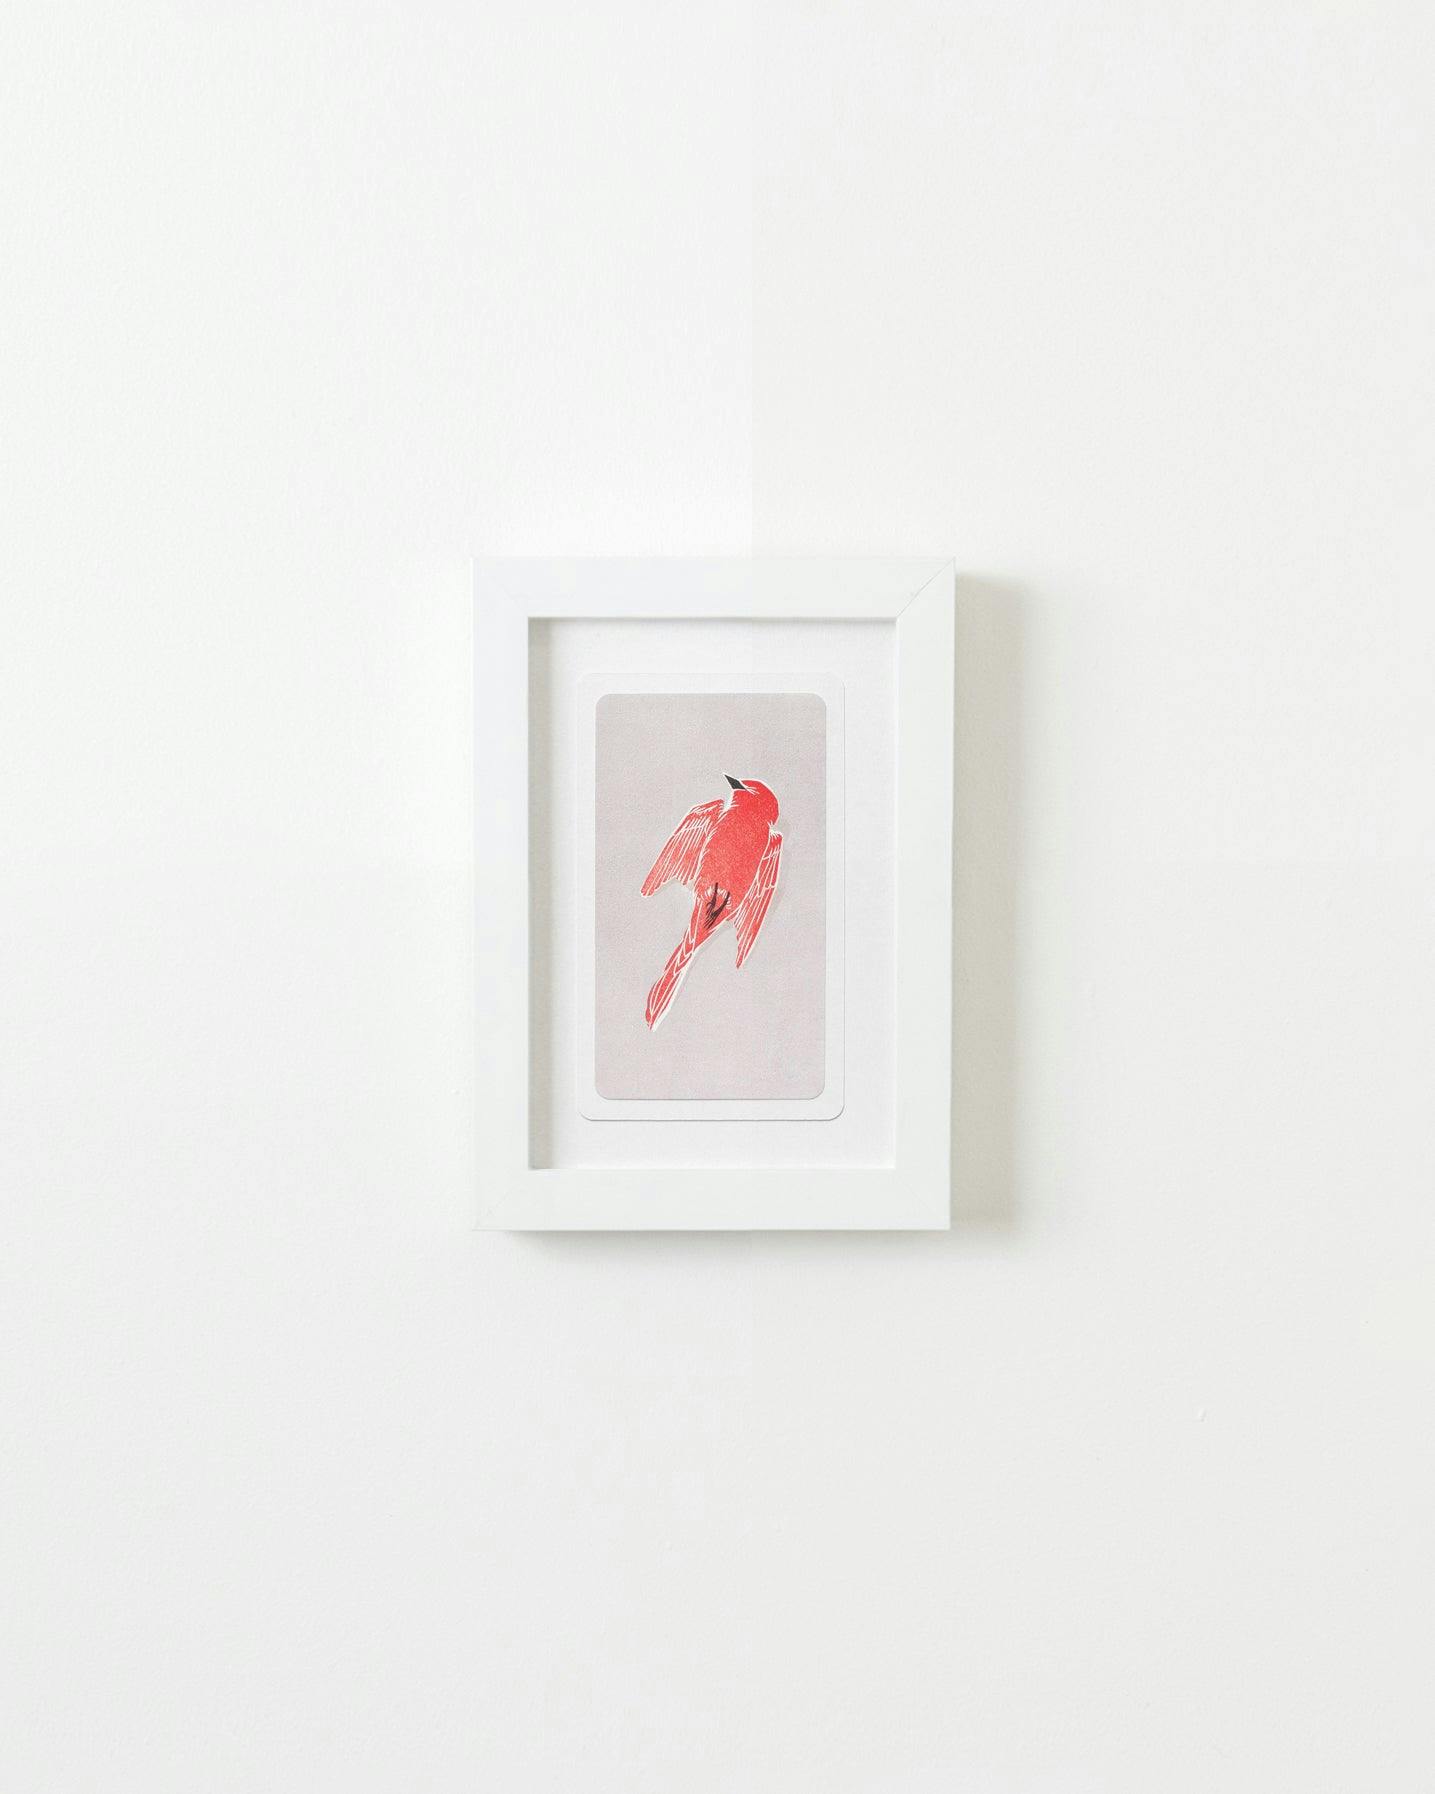 Print by Langdon Graves titled "Bird (Home Circle - Valentine)".